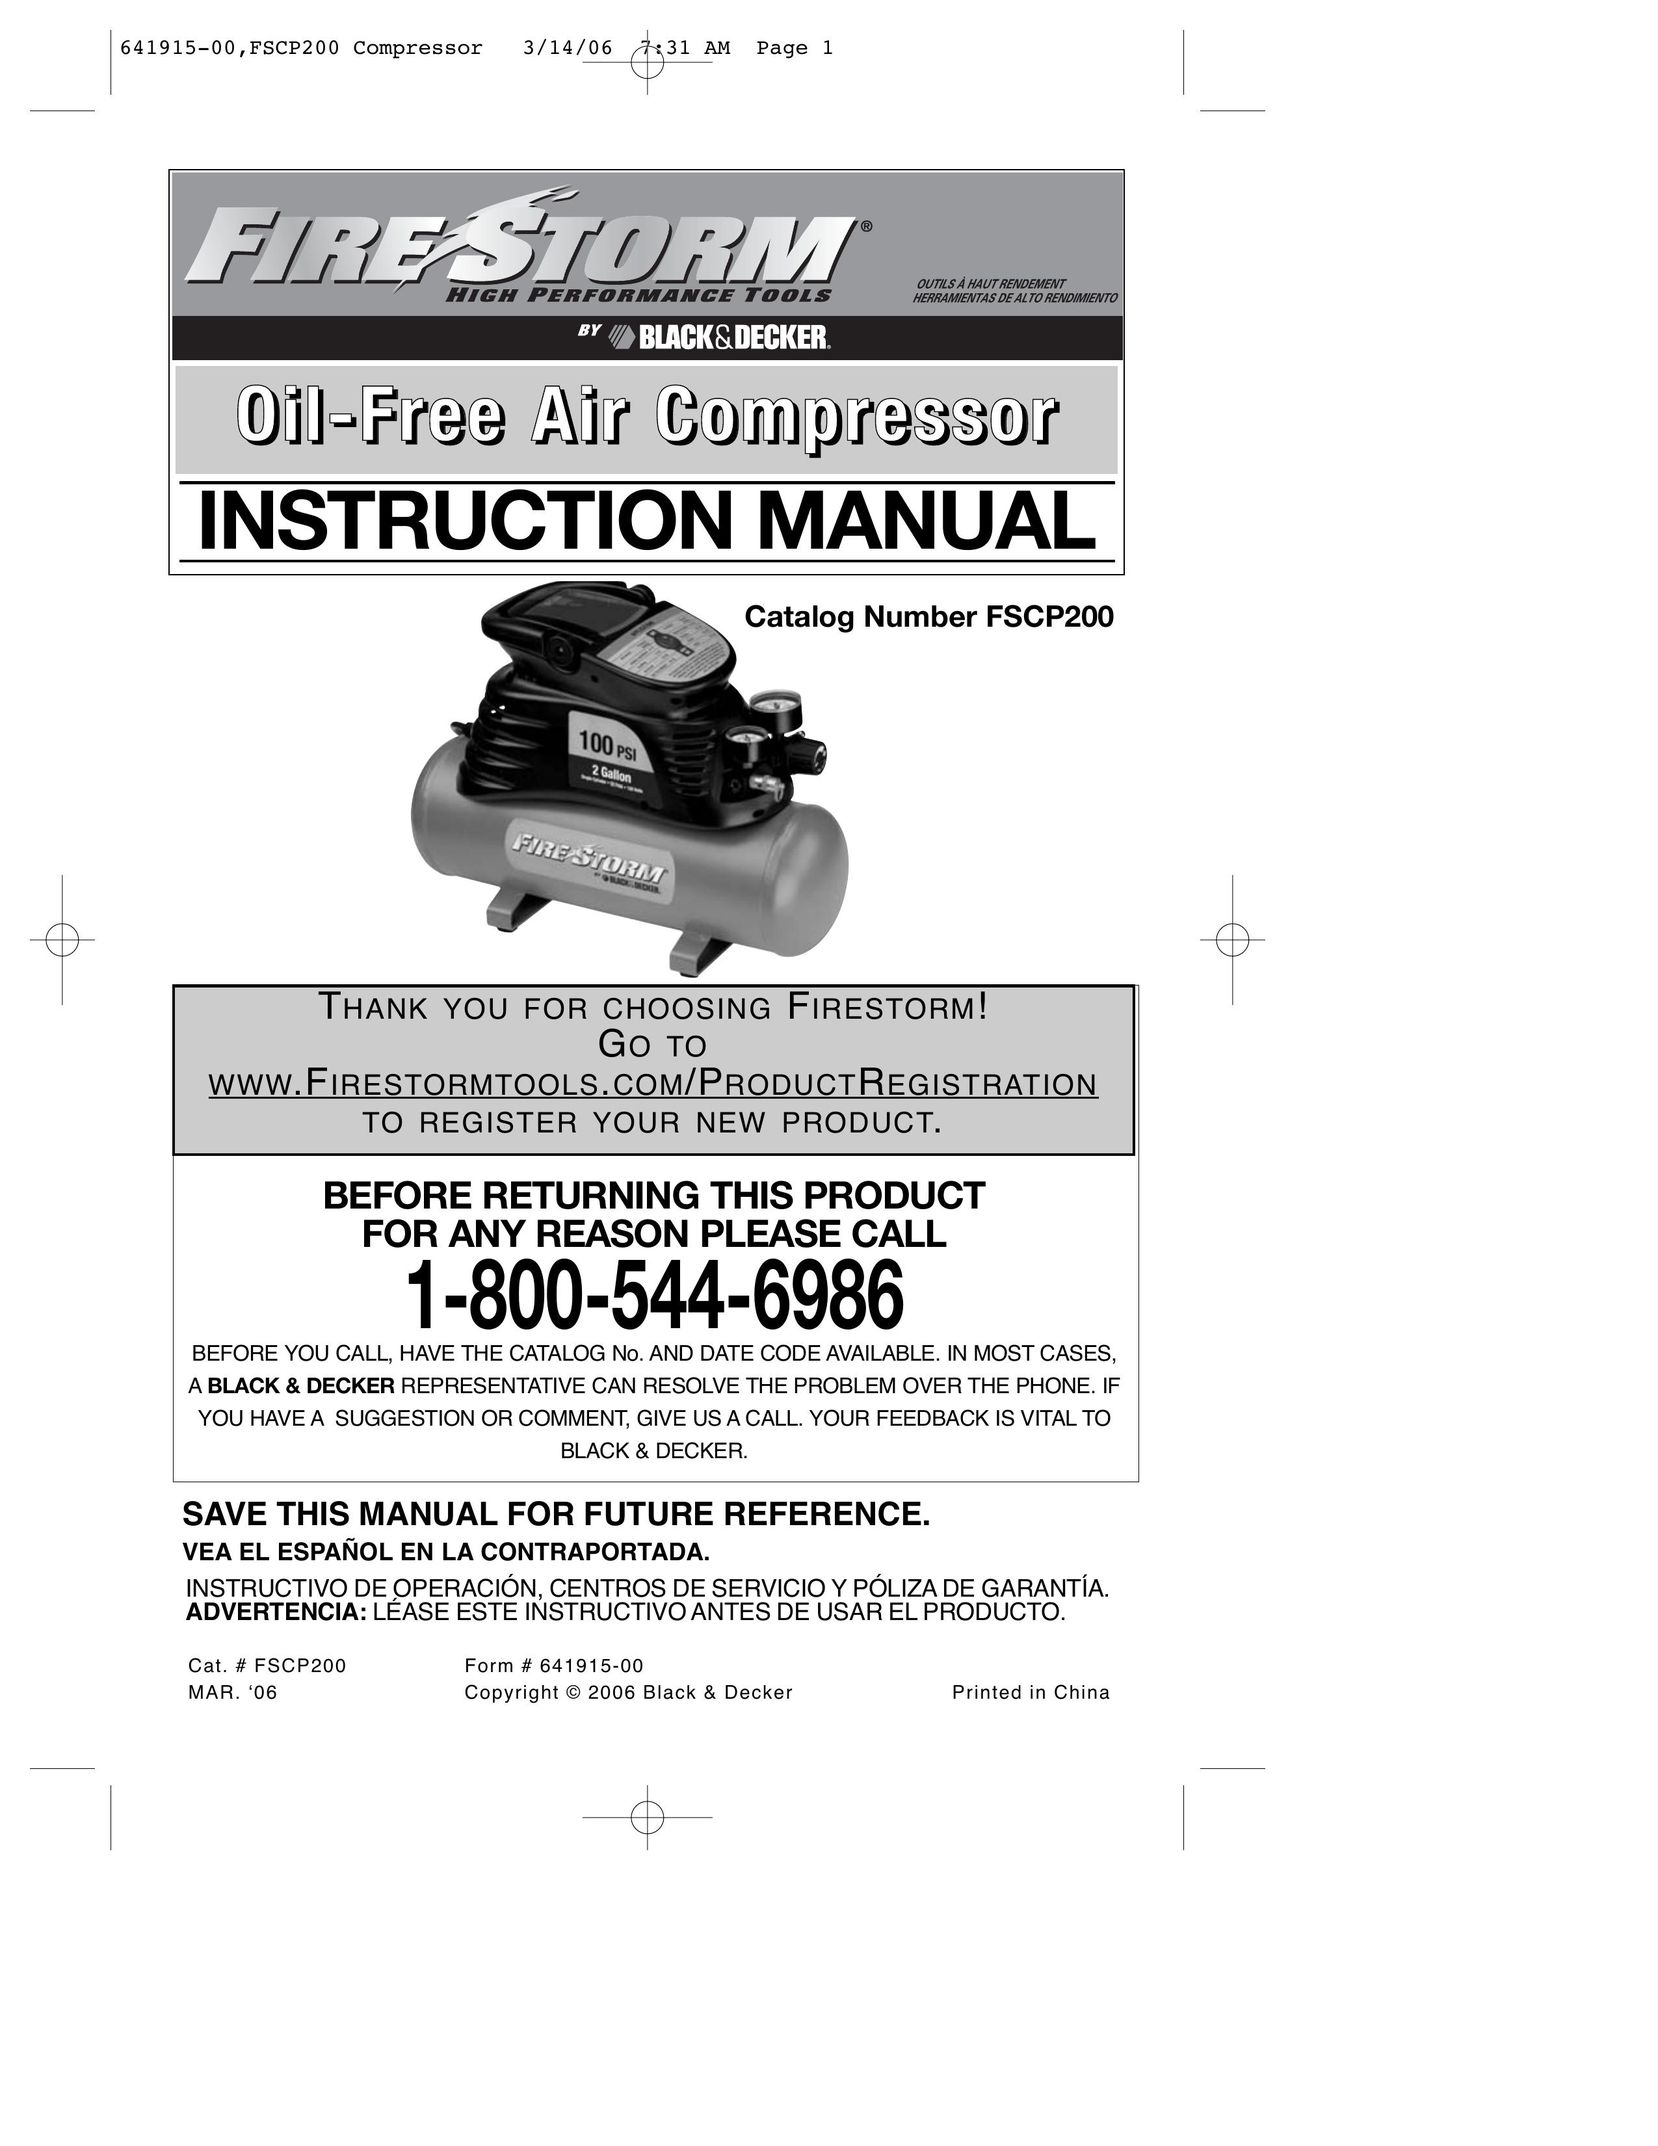 Black & Decker FSCP200 Air Compressor User Manual